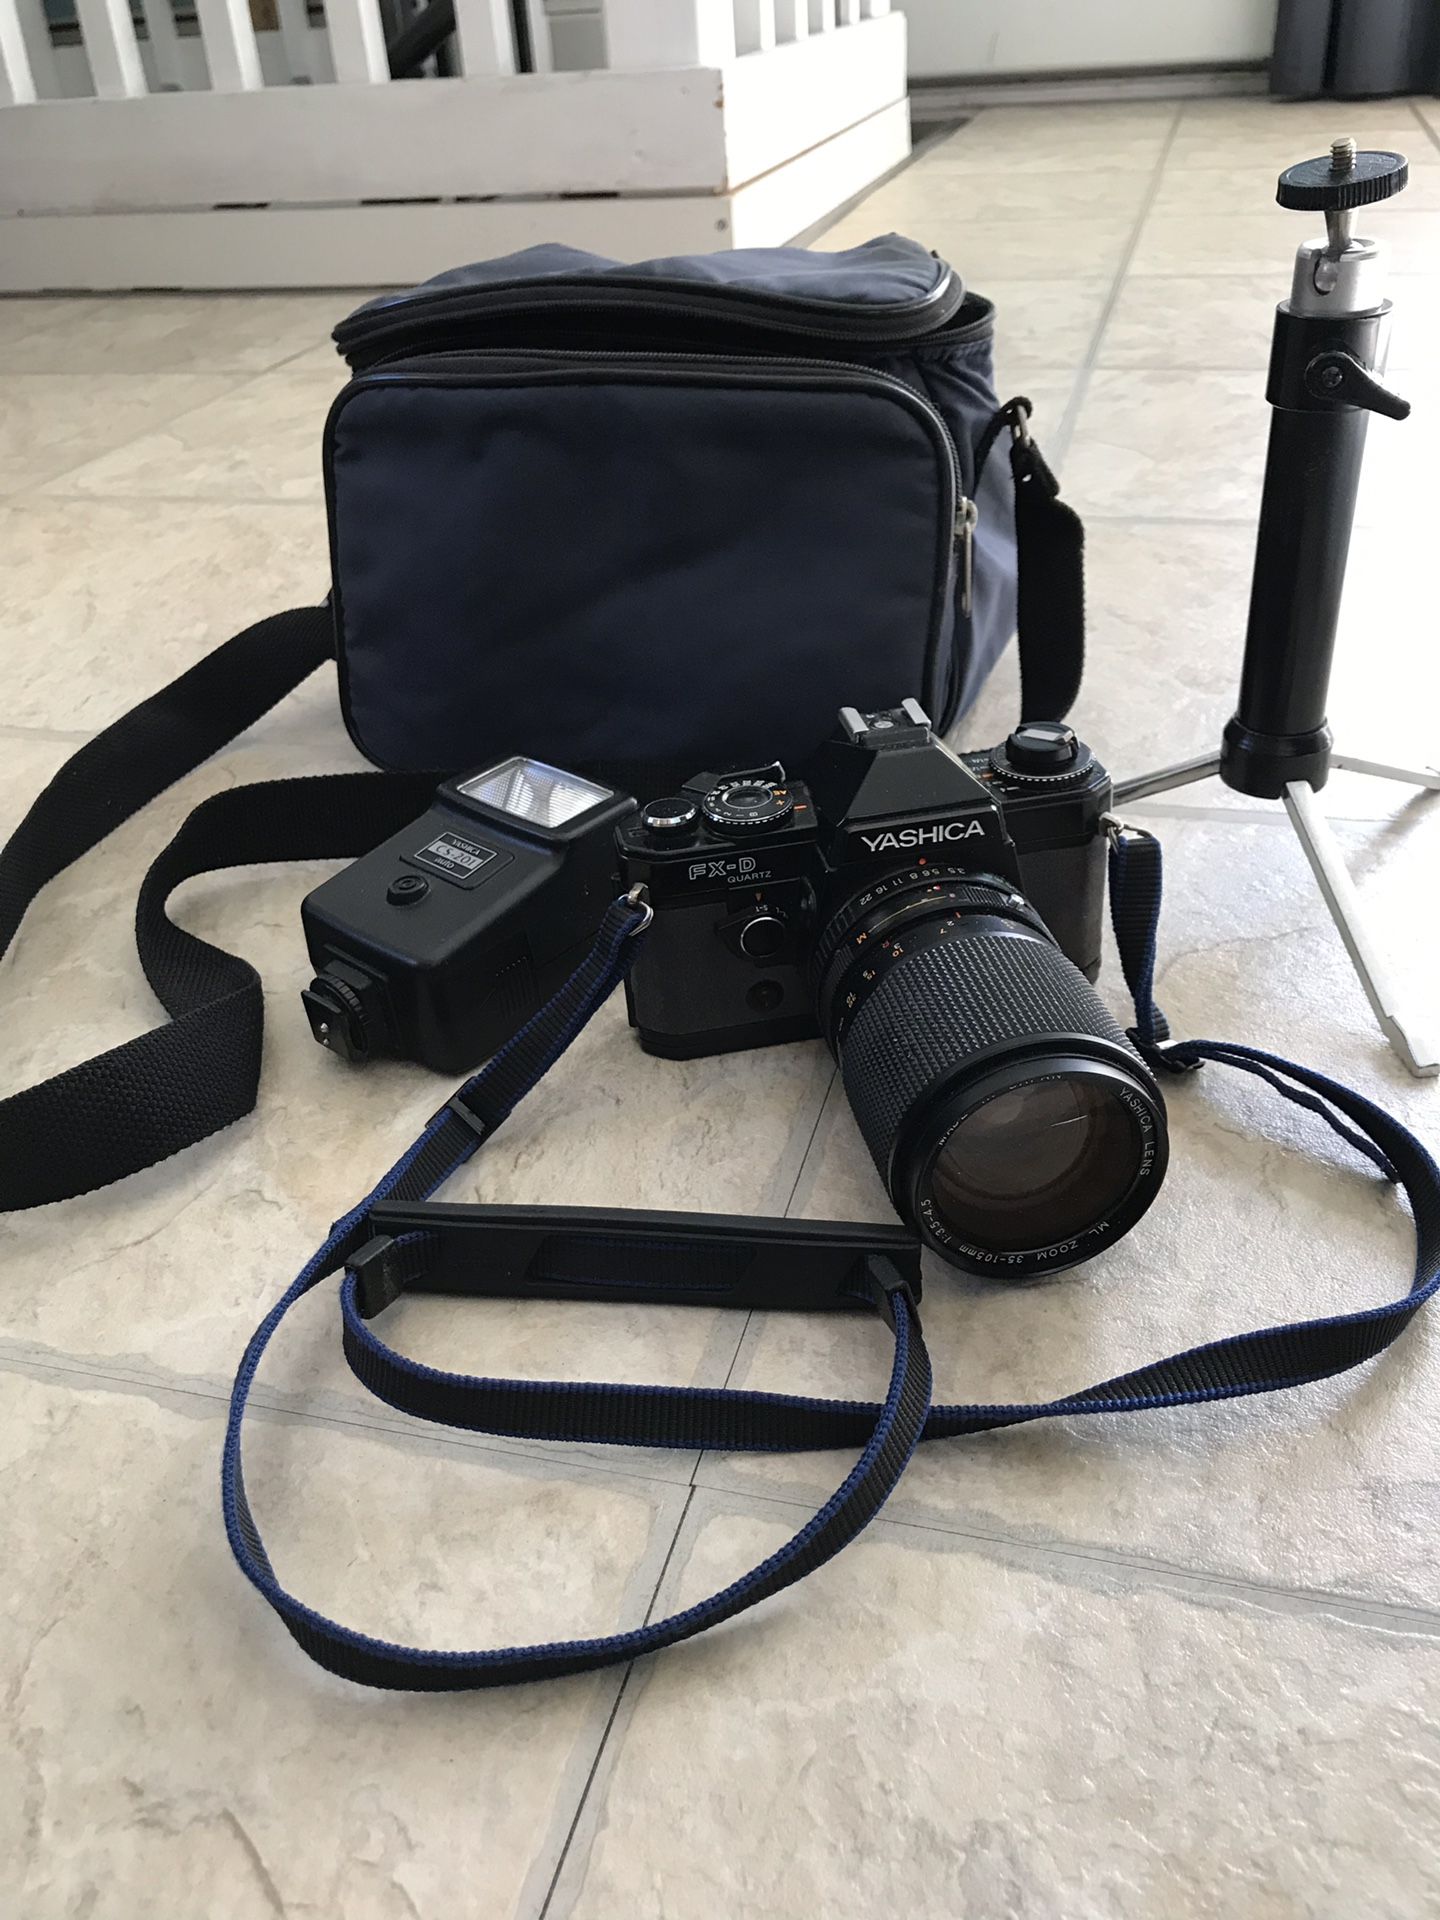 Yashica 35 mm camera w/ bag, flash, tripod